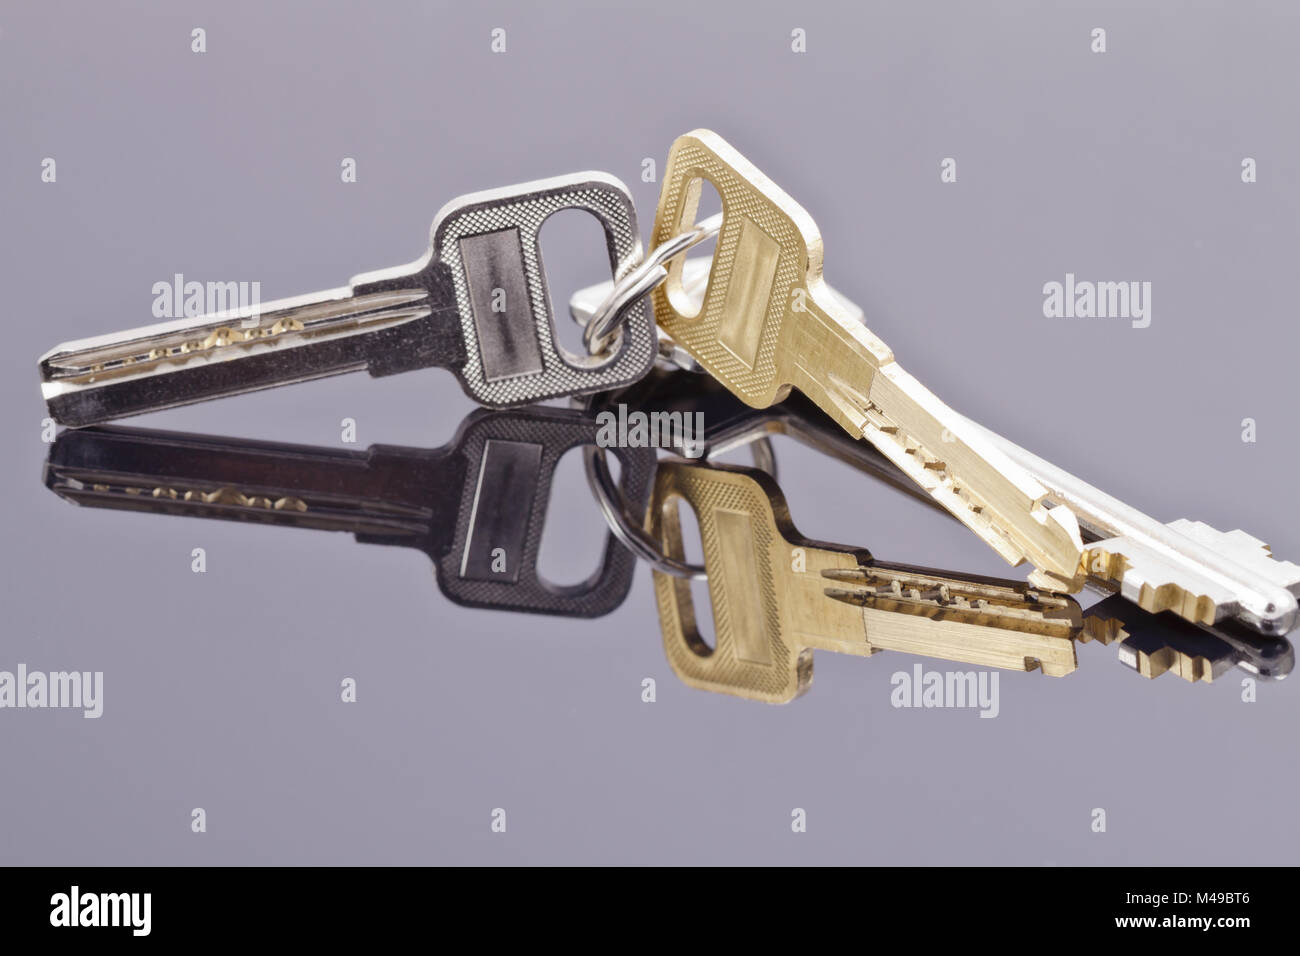 A bunch of keys lying on a black reflective surface Stock Photo